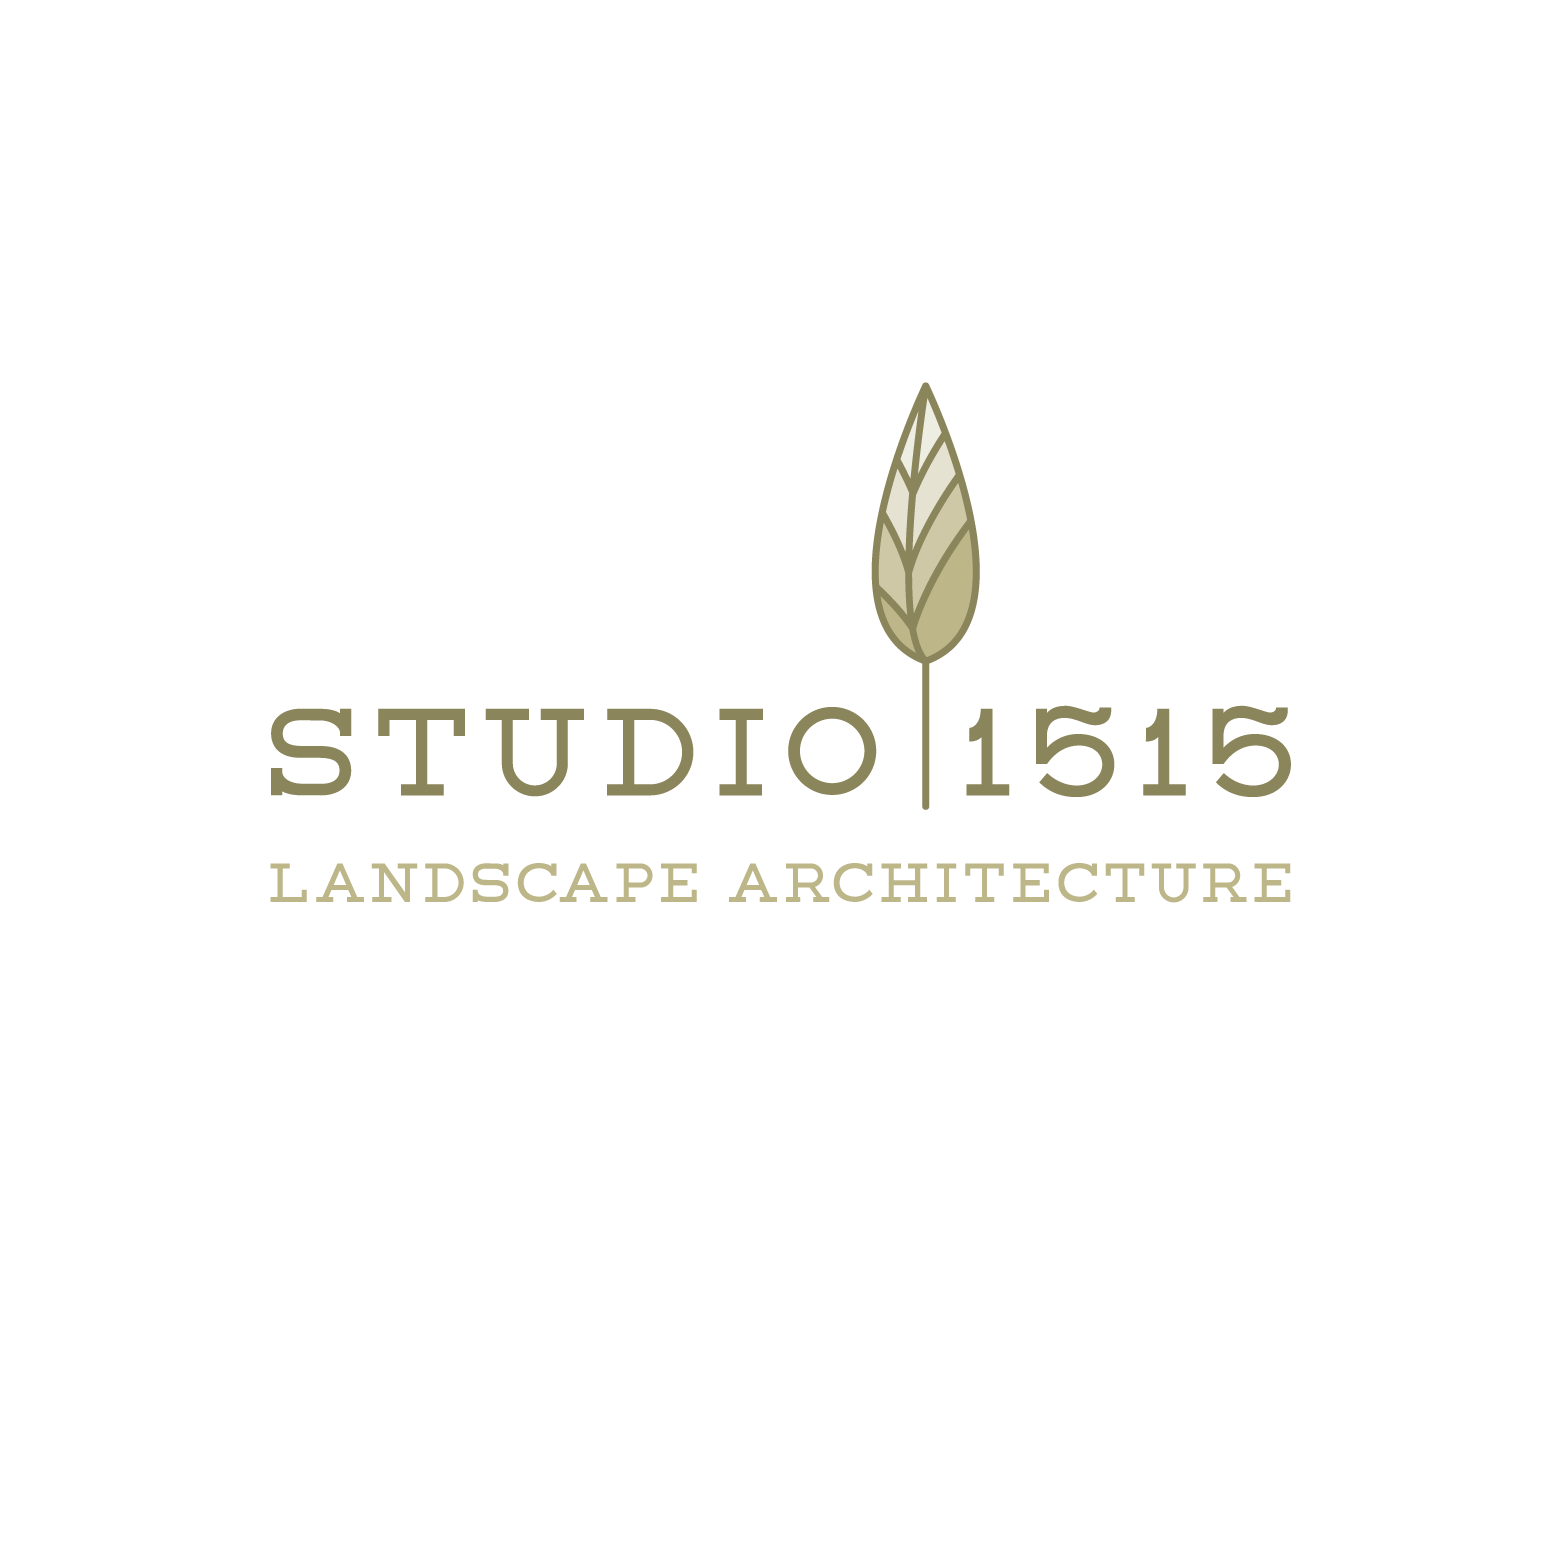 Studio 1515 logo-01.png